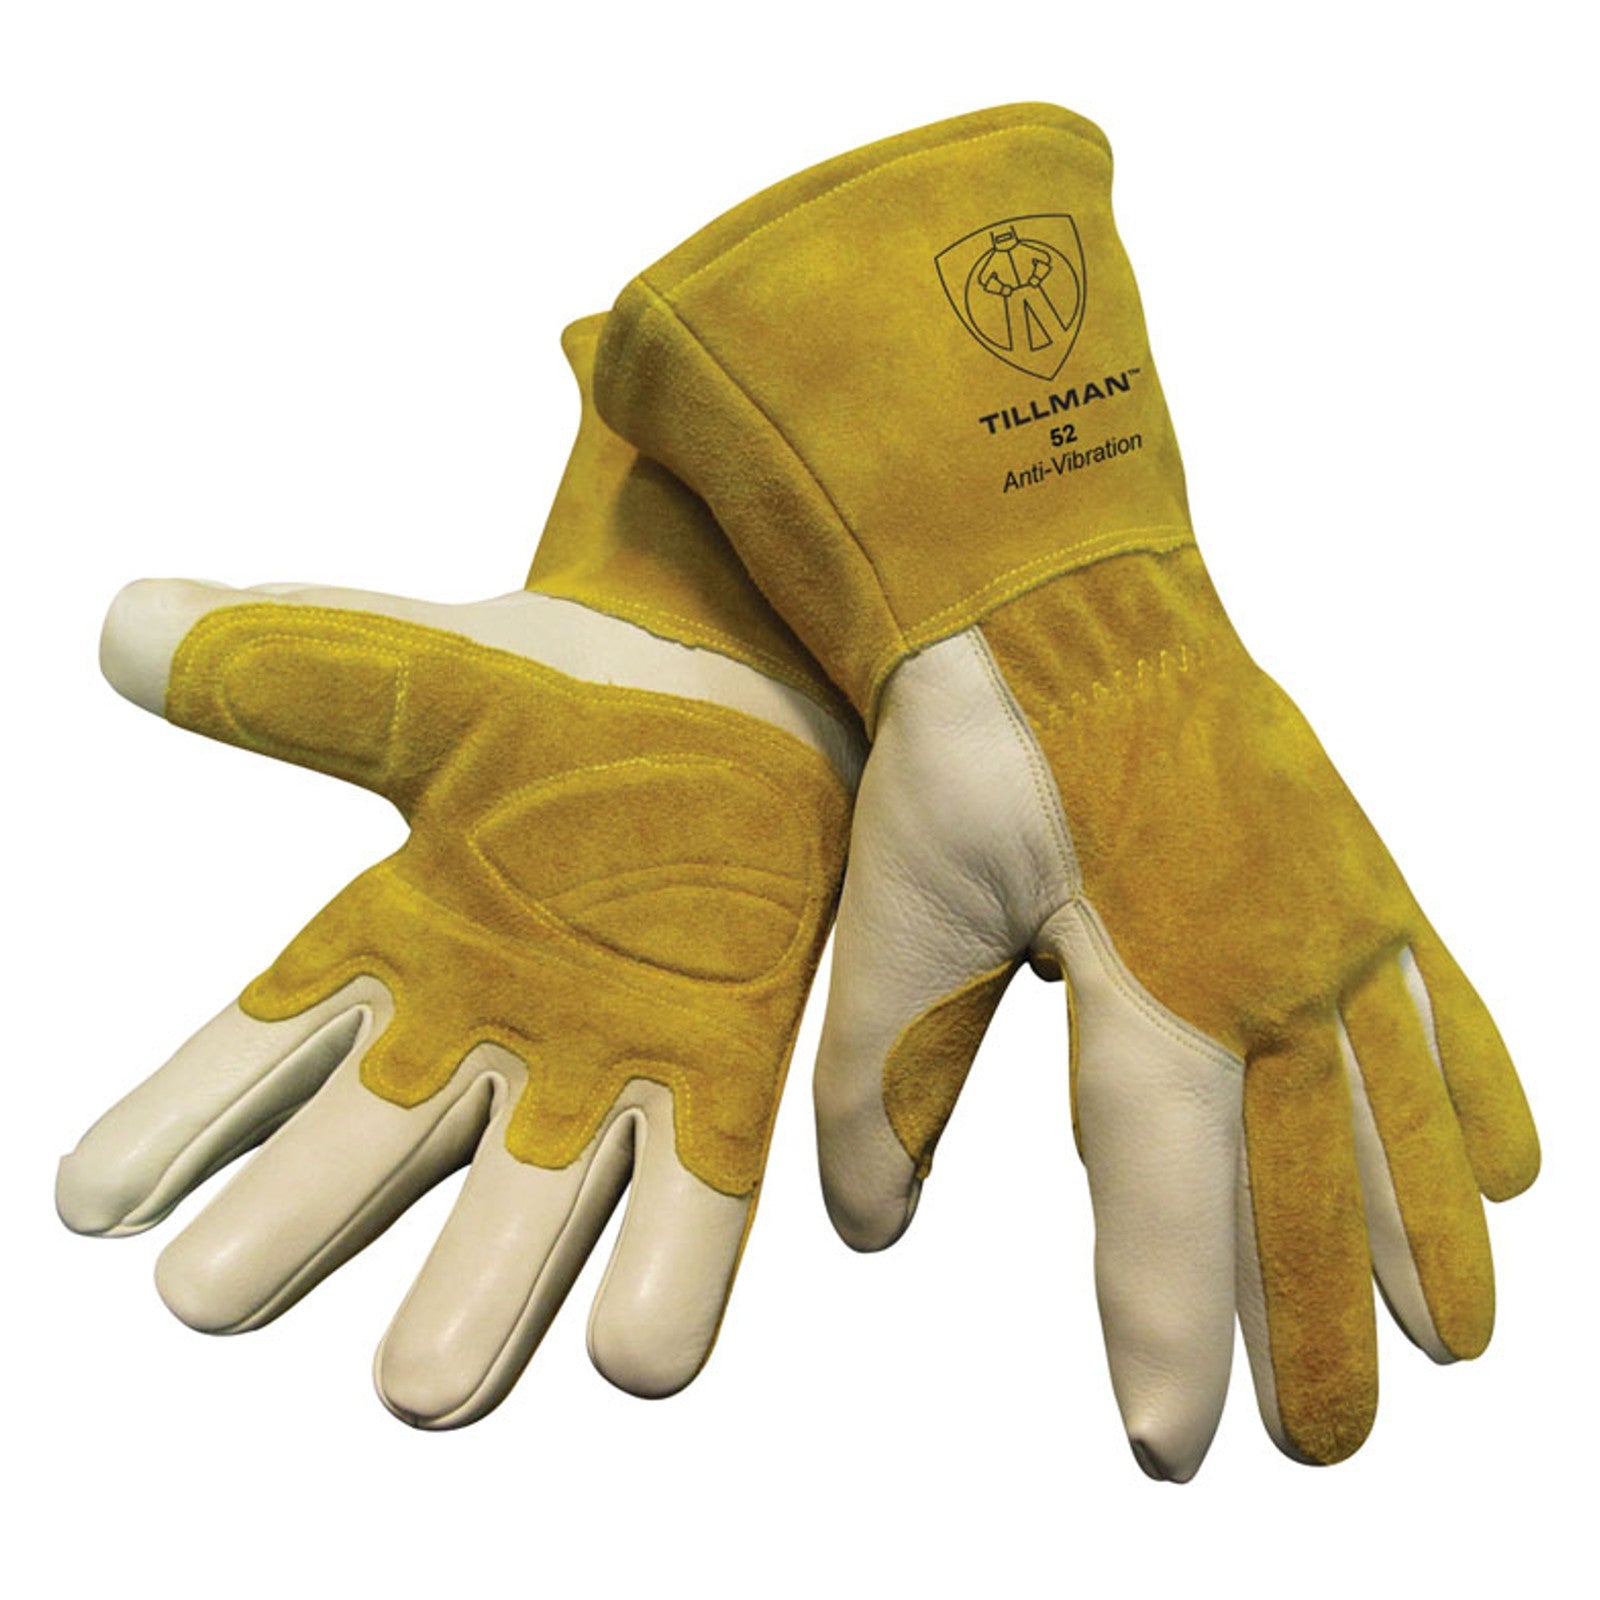 Tillman 52 Top Grain Cowhide MIG Welding Gloves with Gel Inserts